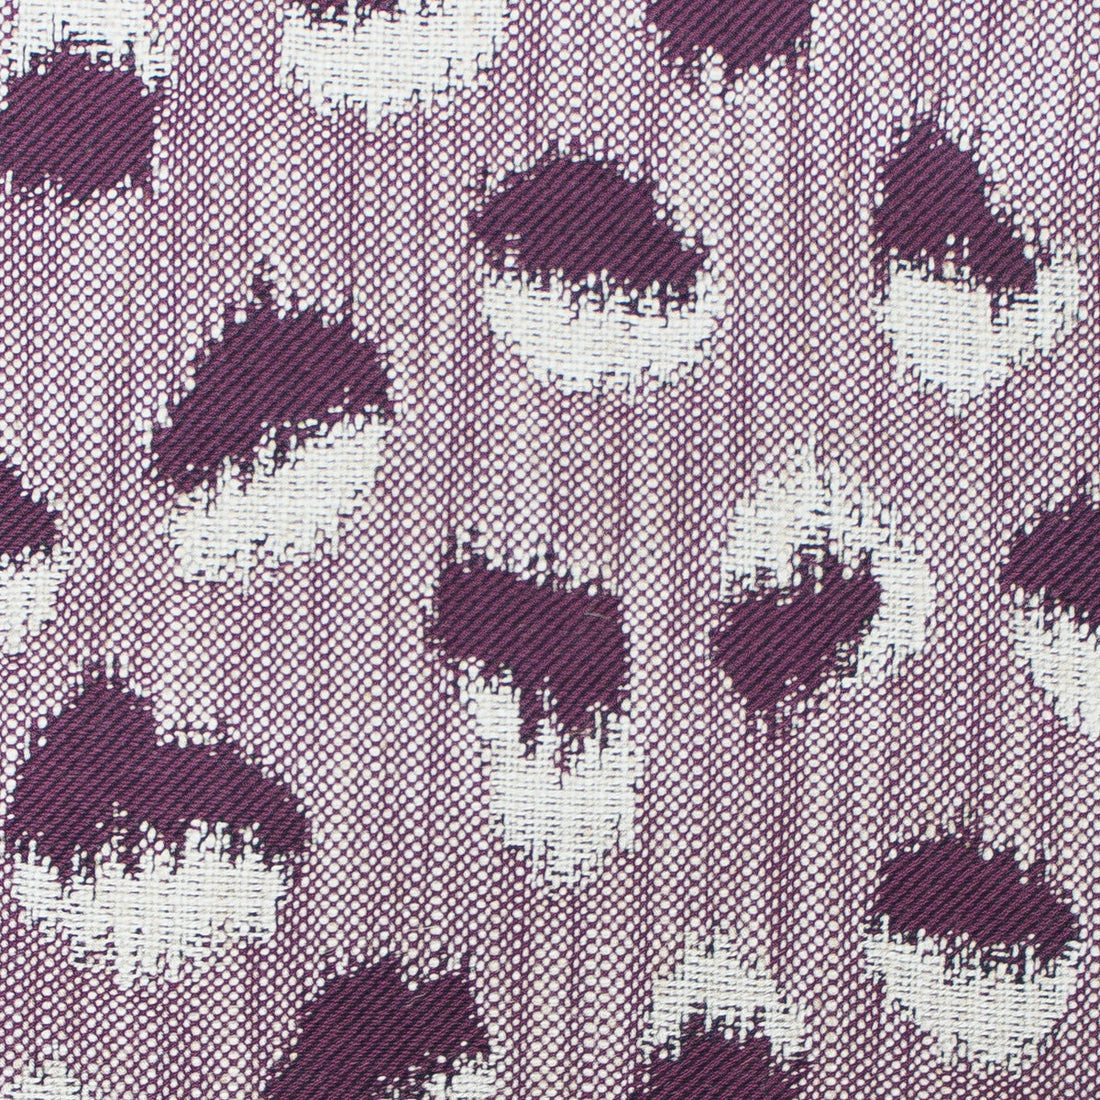 Castilla fabric in berenjena color - pattern GDT5569.003.0 - by Gaston y Daniela in the Gaston Nuevo Mundo collection